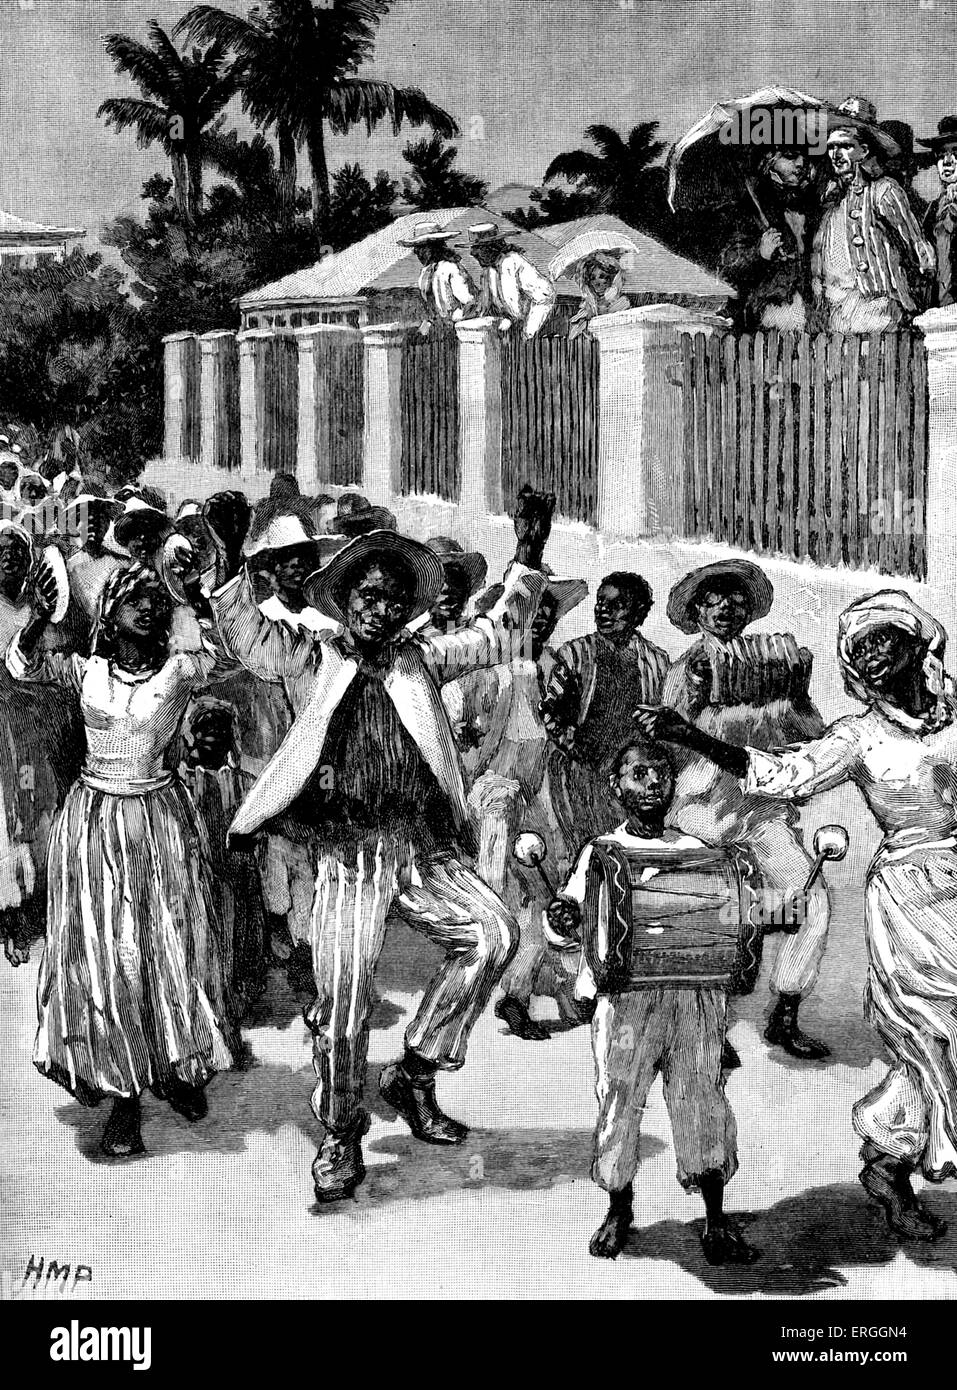 Festival der Sklaverei Emanzipation in Sklaverei Emanzipation Act 1833 nach Barbados. Stockfoto